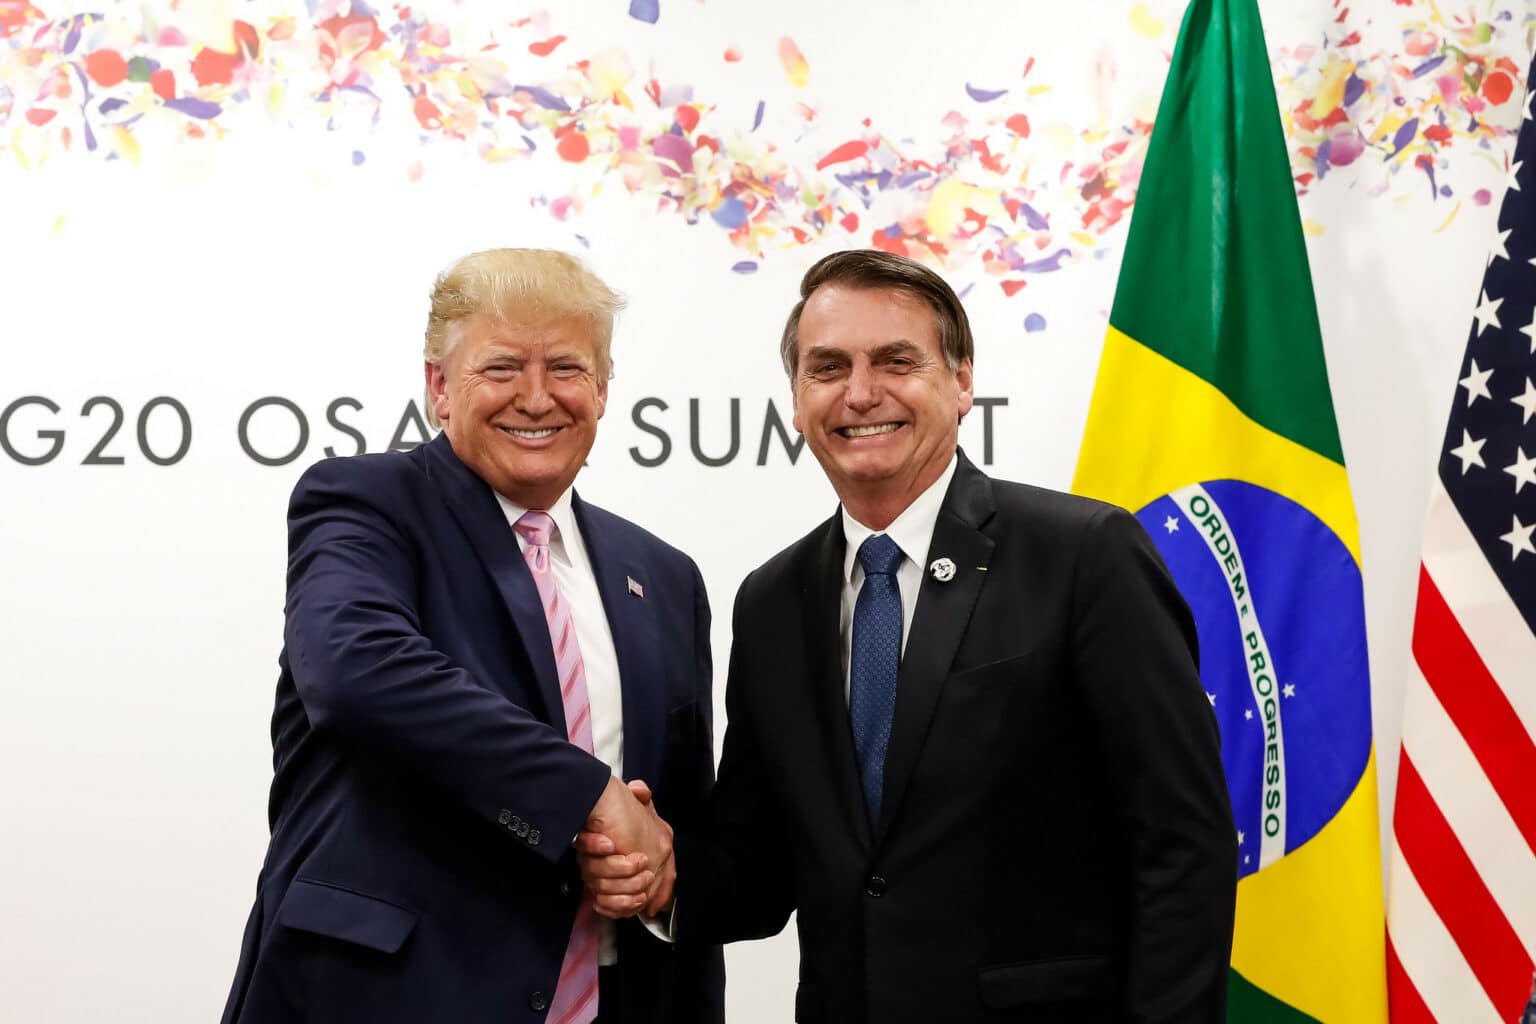 Donald Trump shakes hands with Jair Bolsonaro with a Brazilian flag